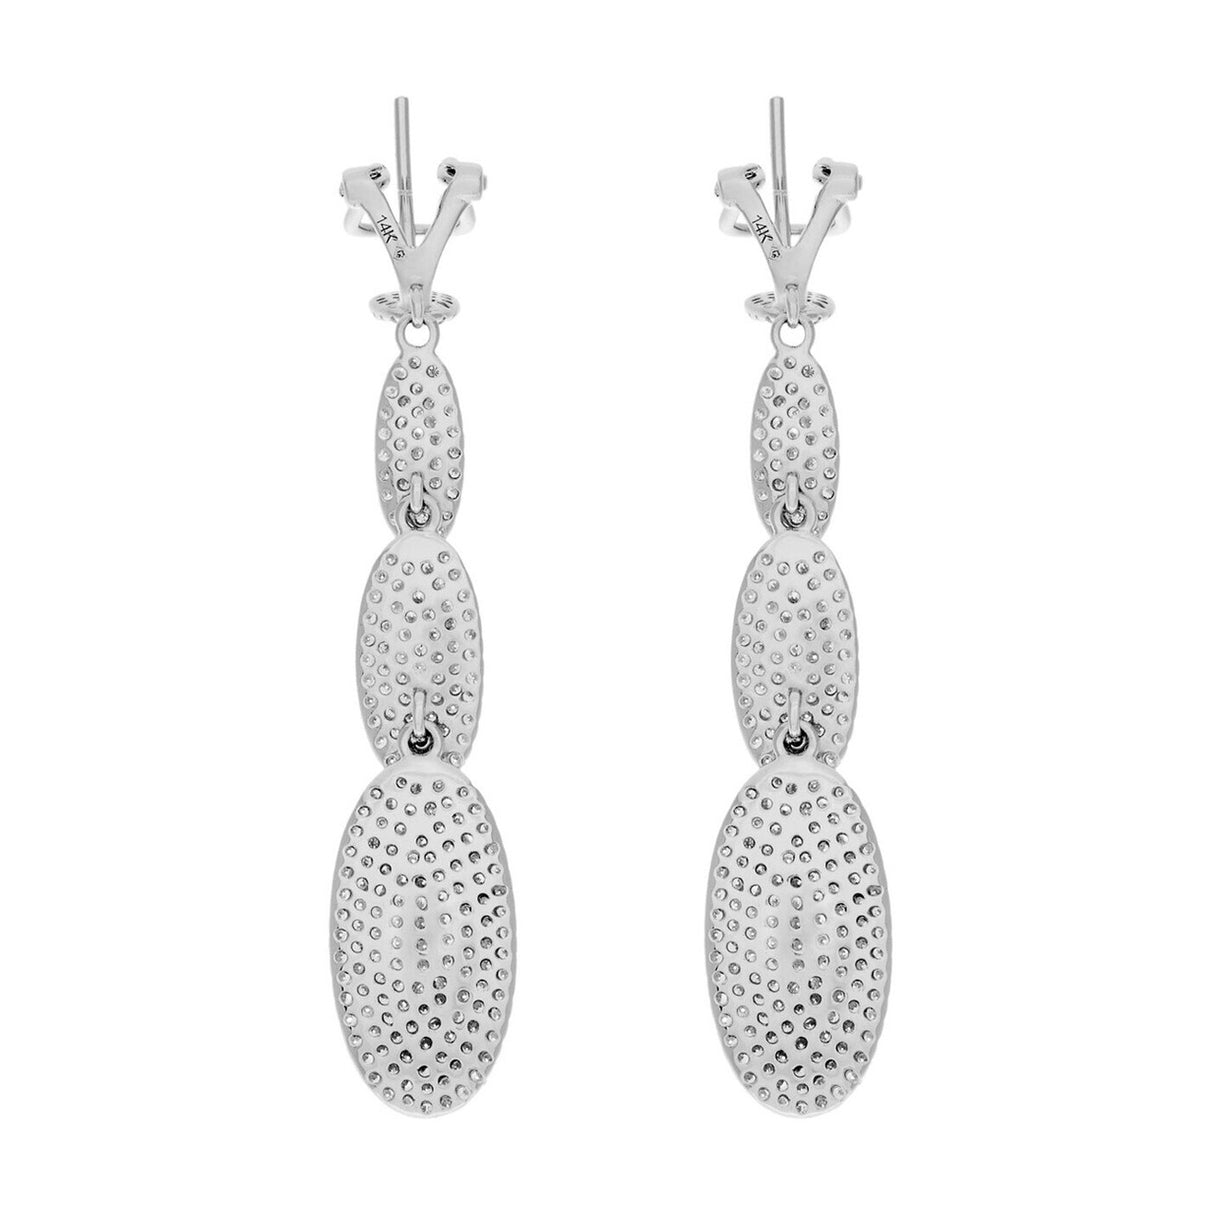 14K White Gold Pave Diamond Drop Earrings